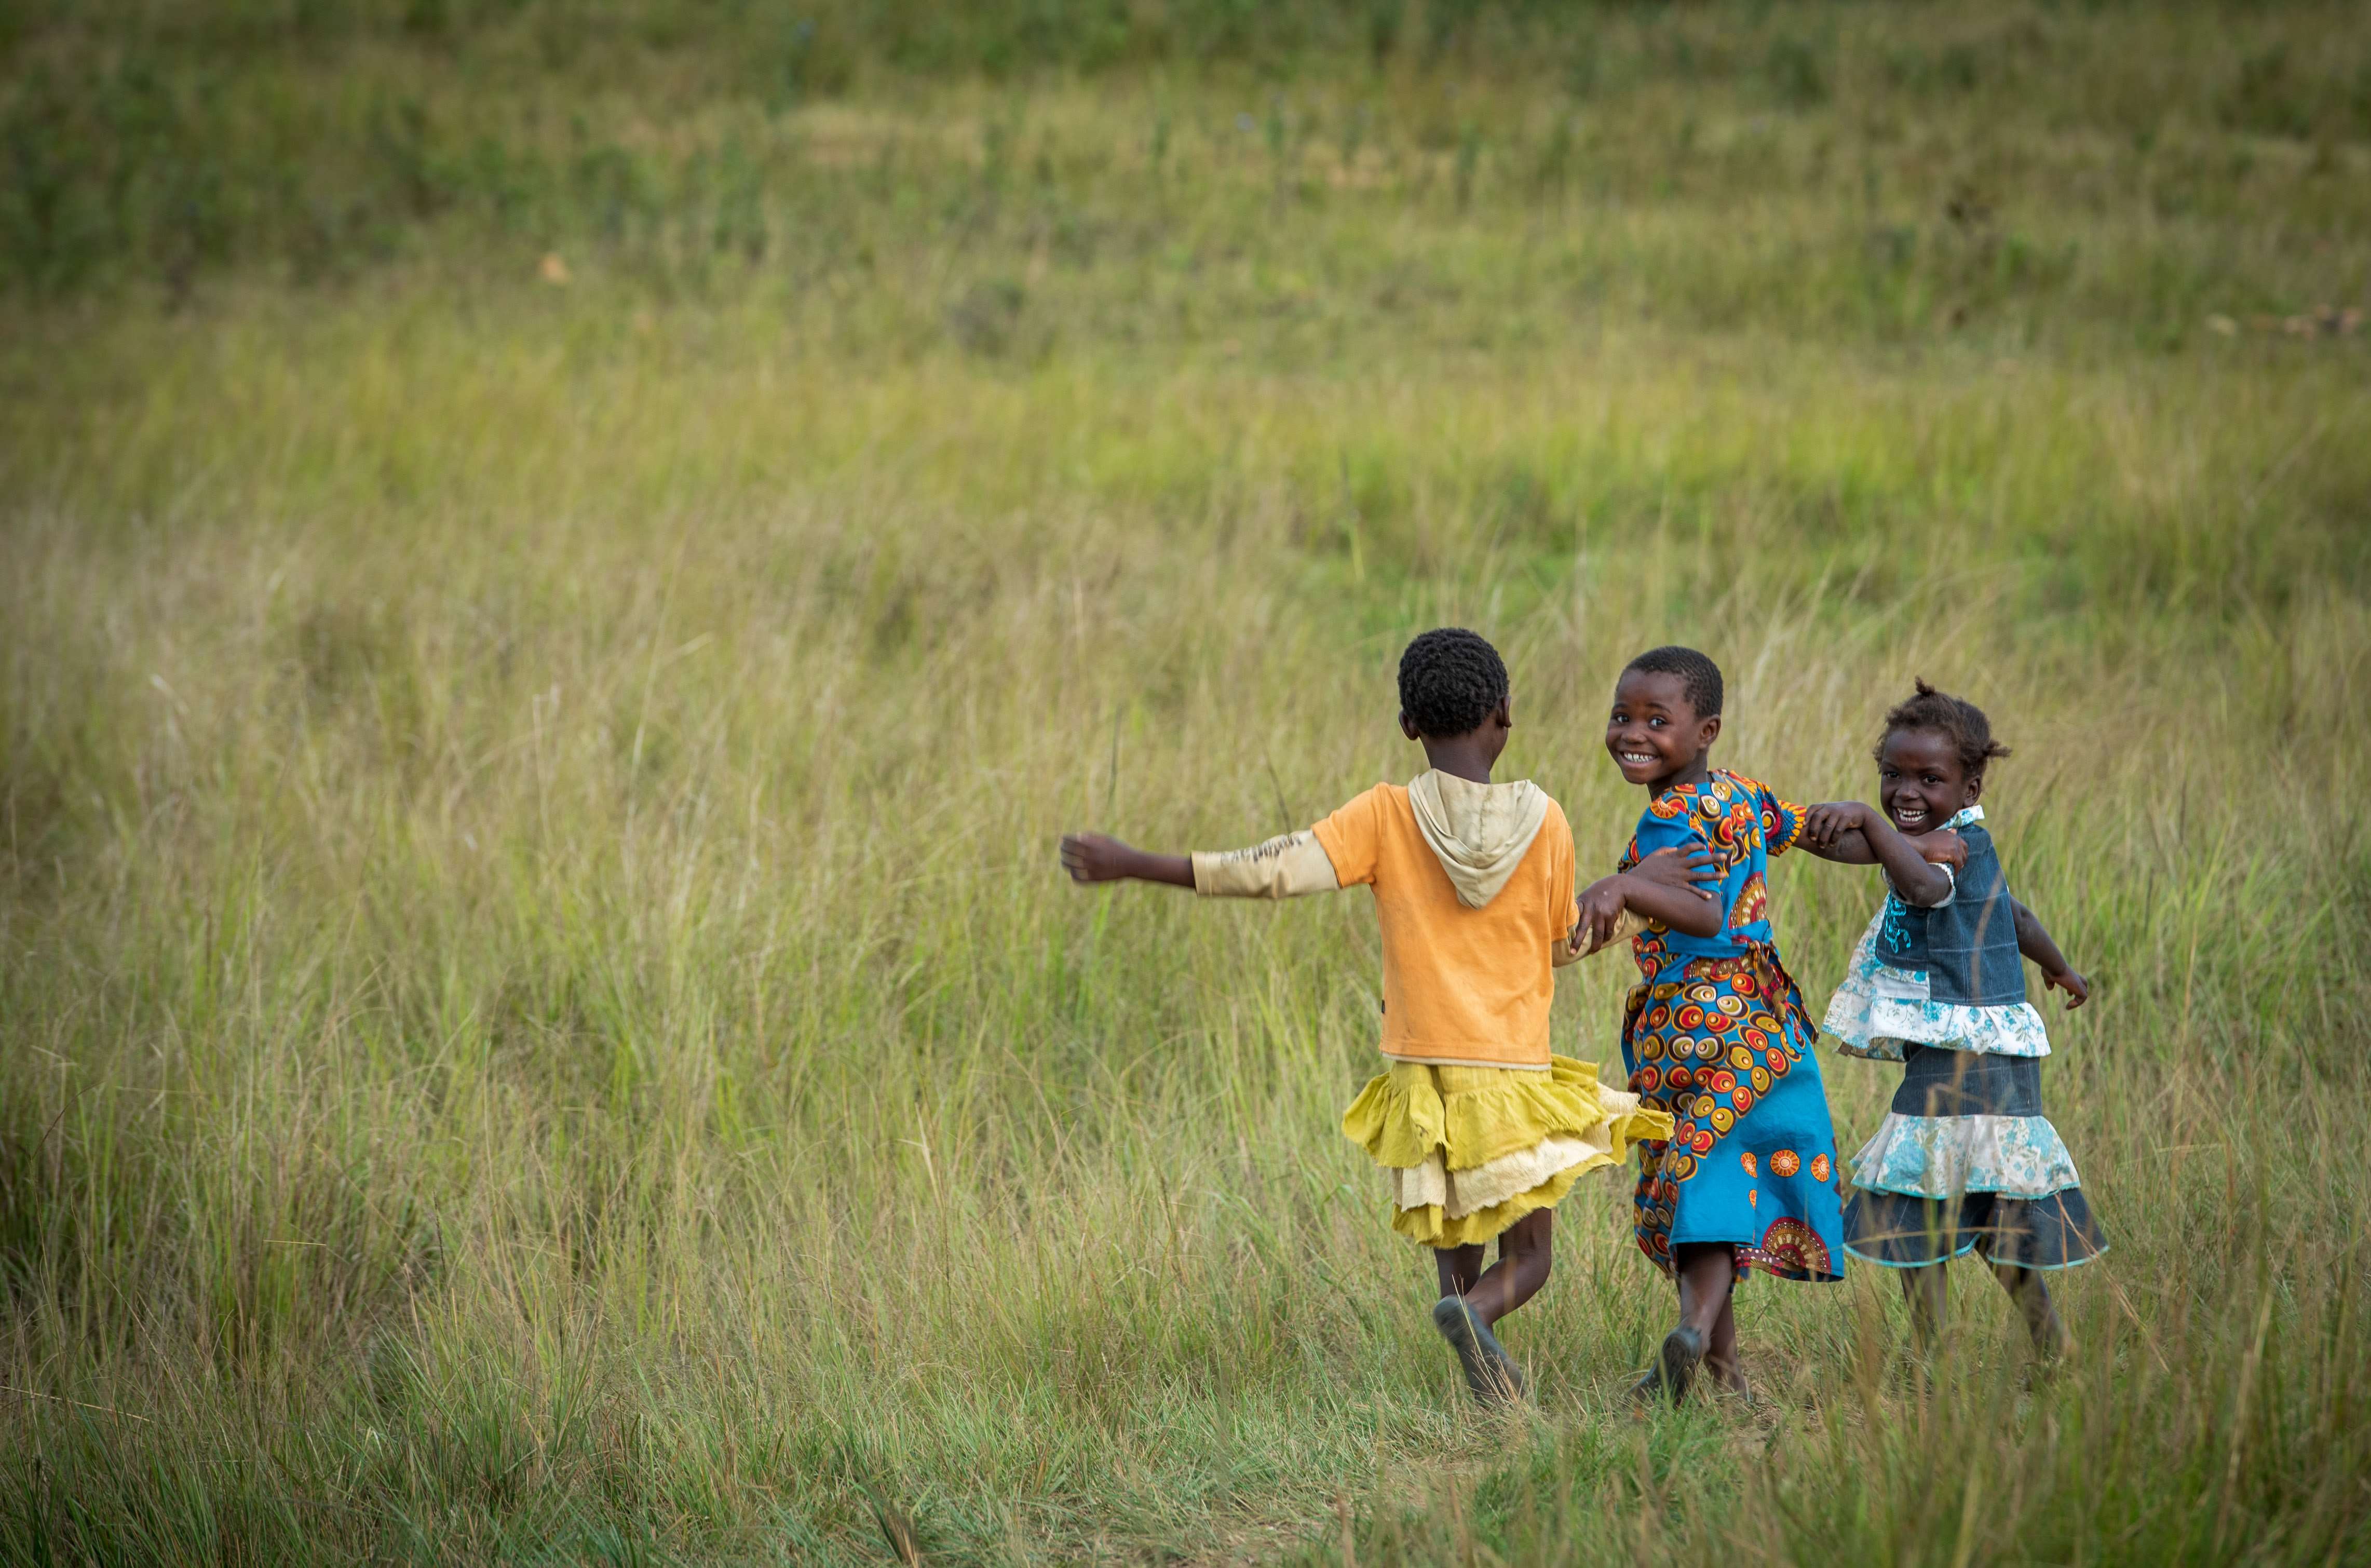 Three children run happily through a field in Zambia